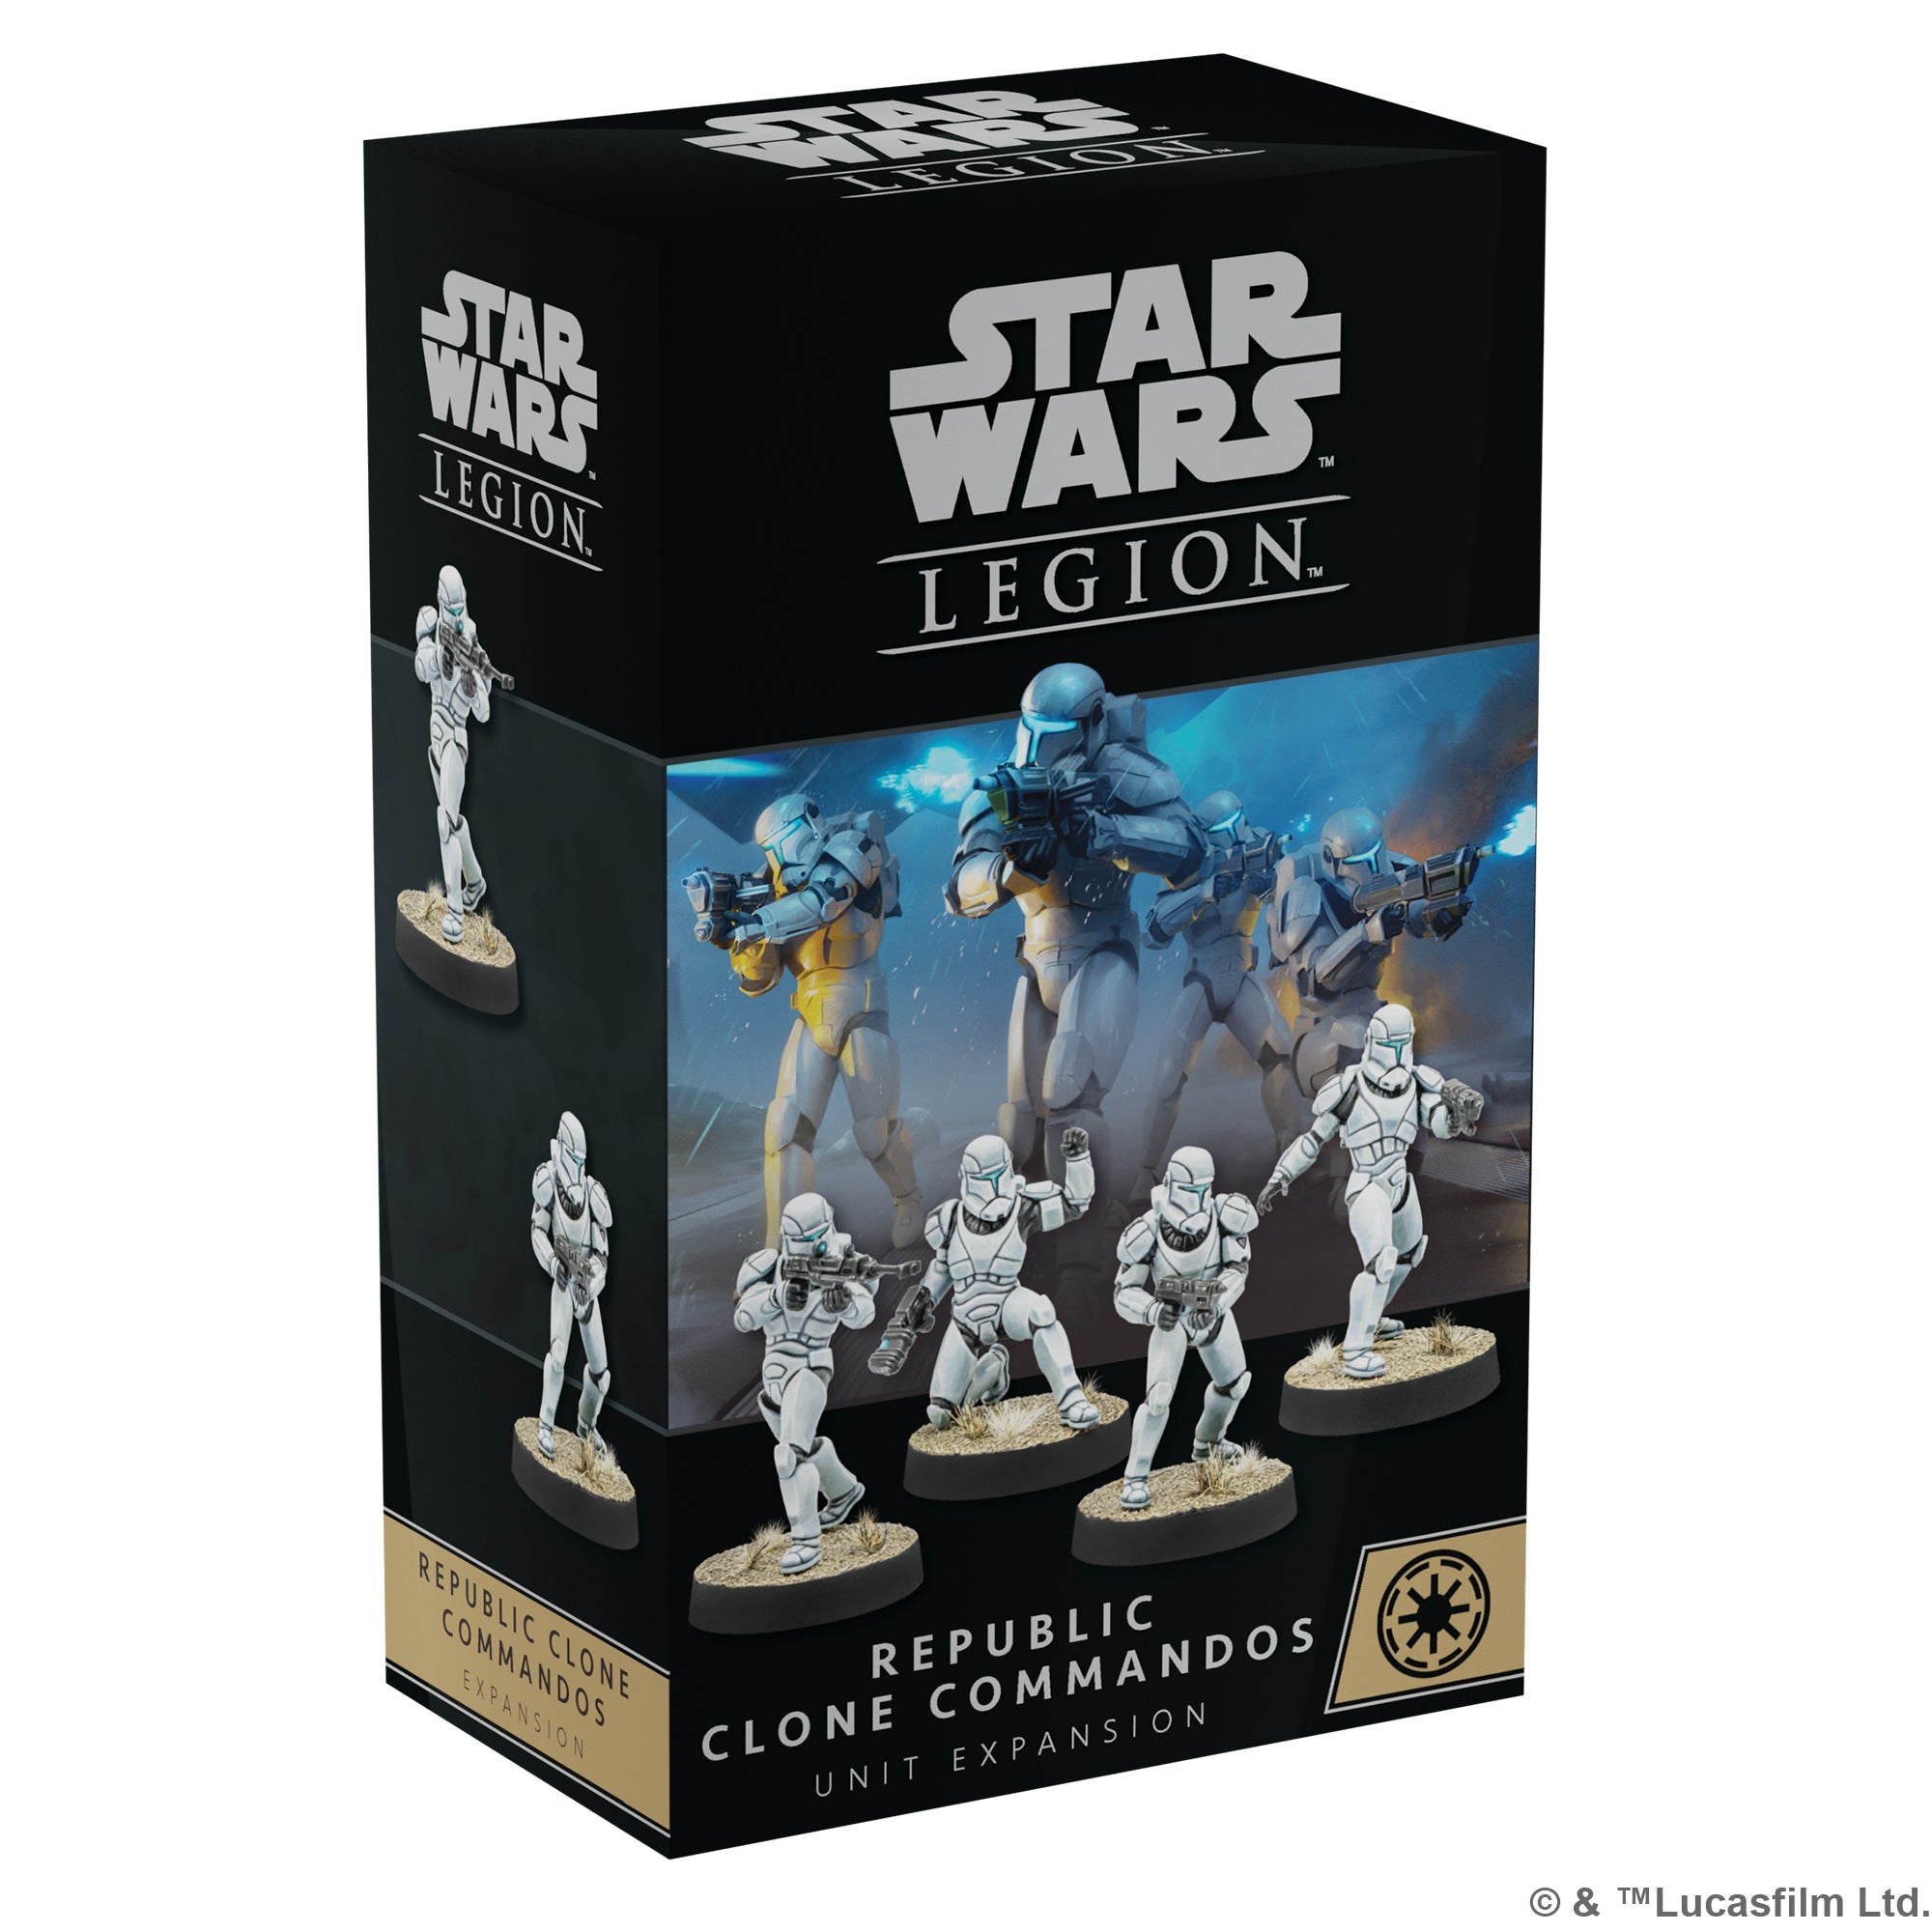 Star Wars Legion: Republic Clone Commandos Expansion Pack